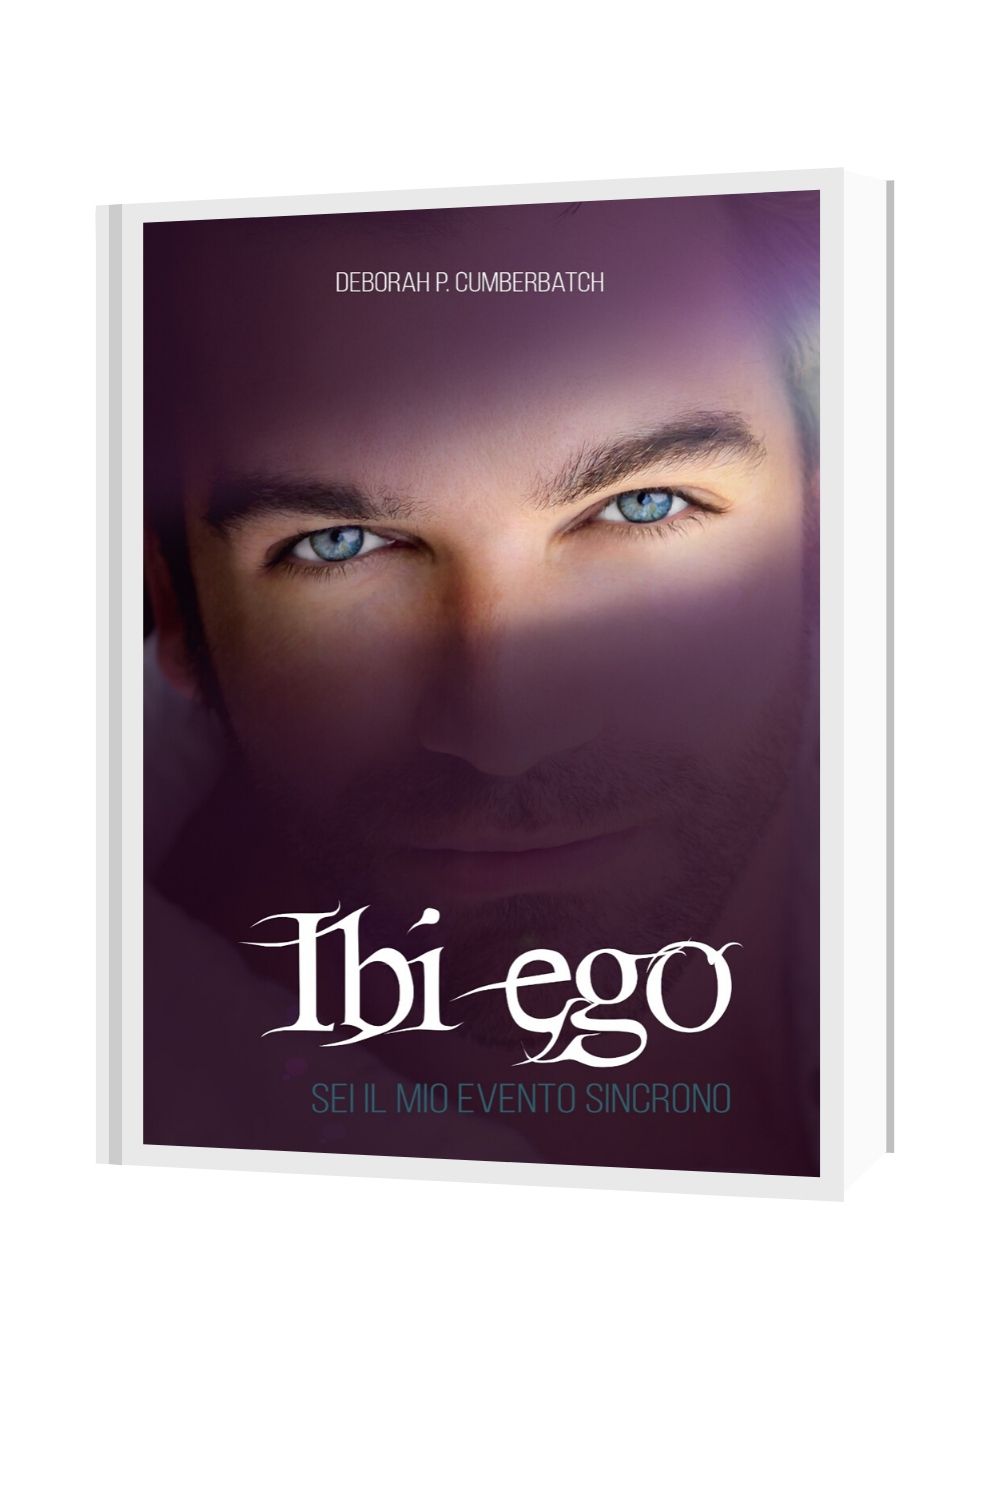 Ibi ego cover